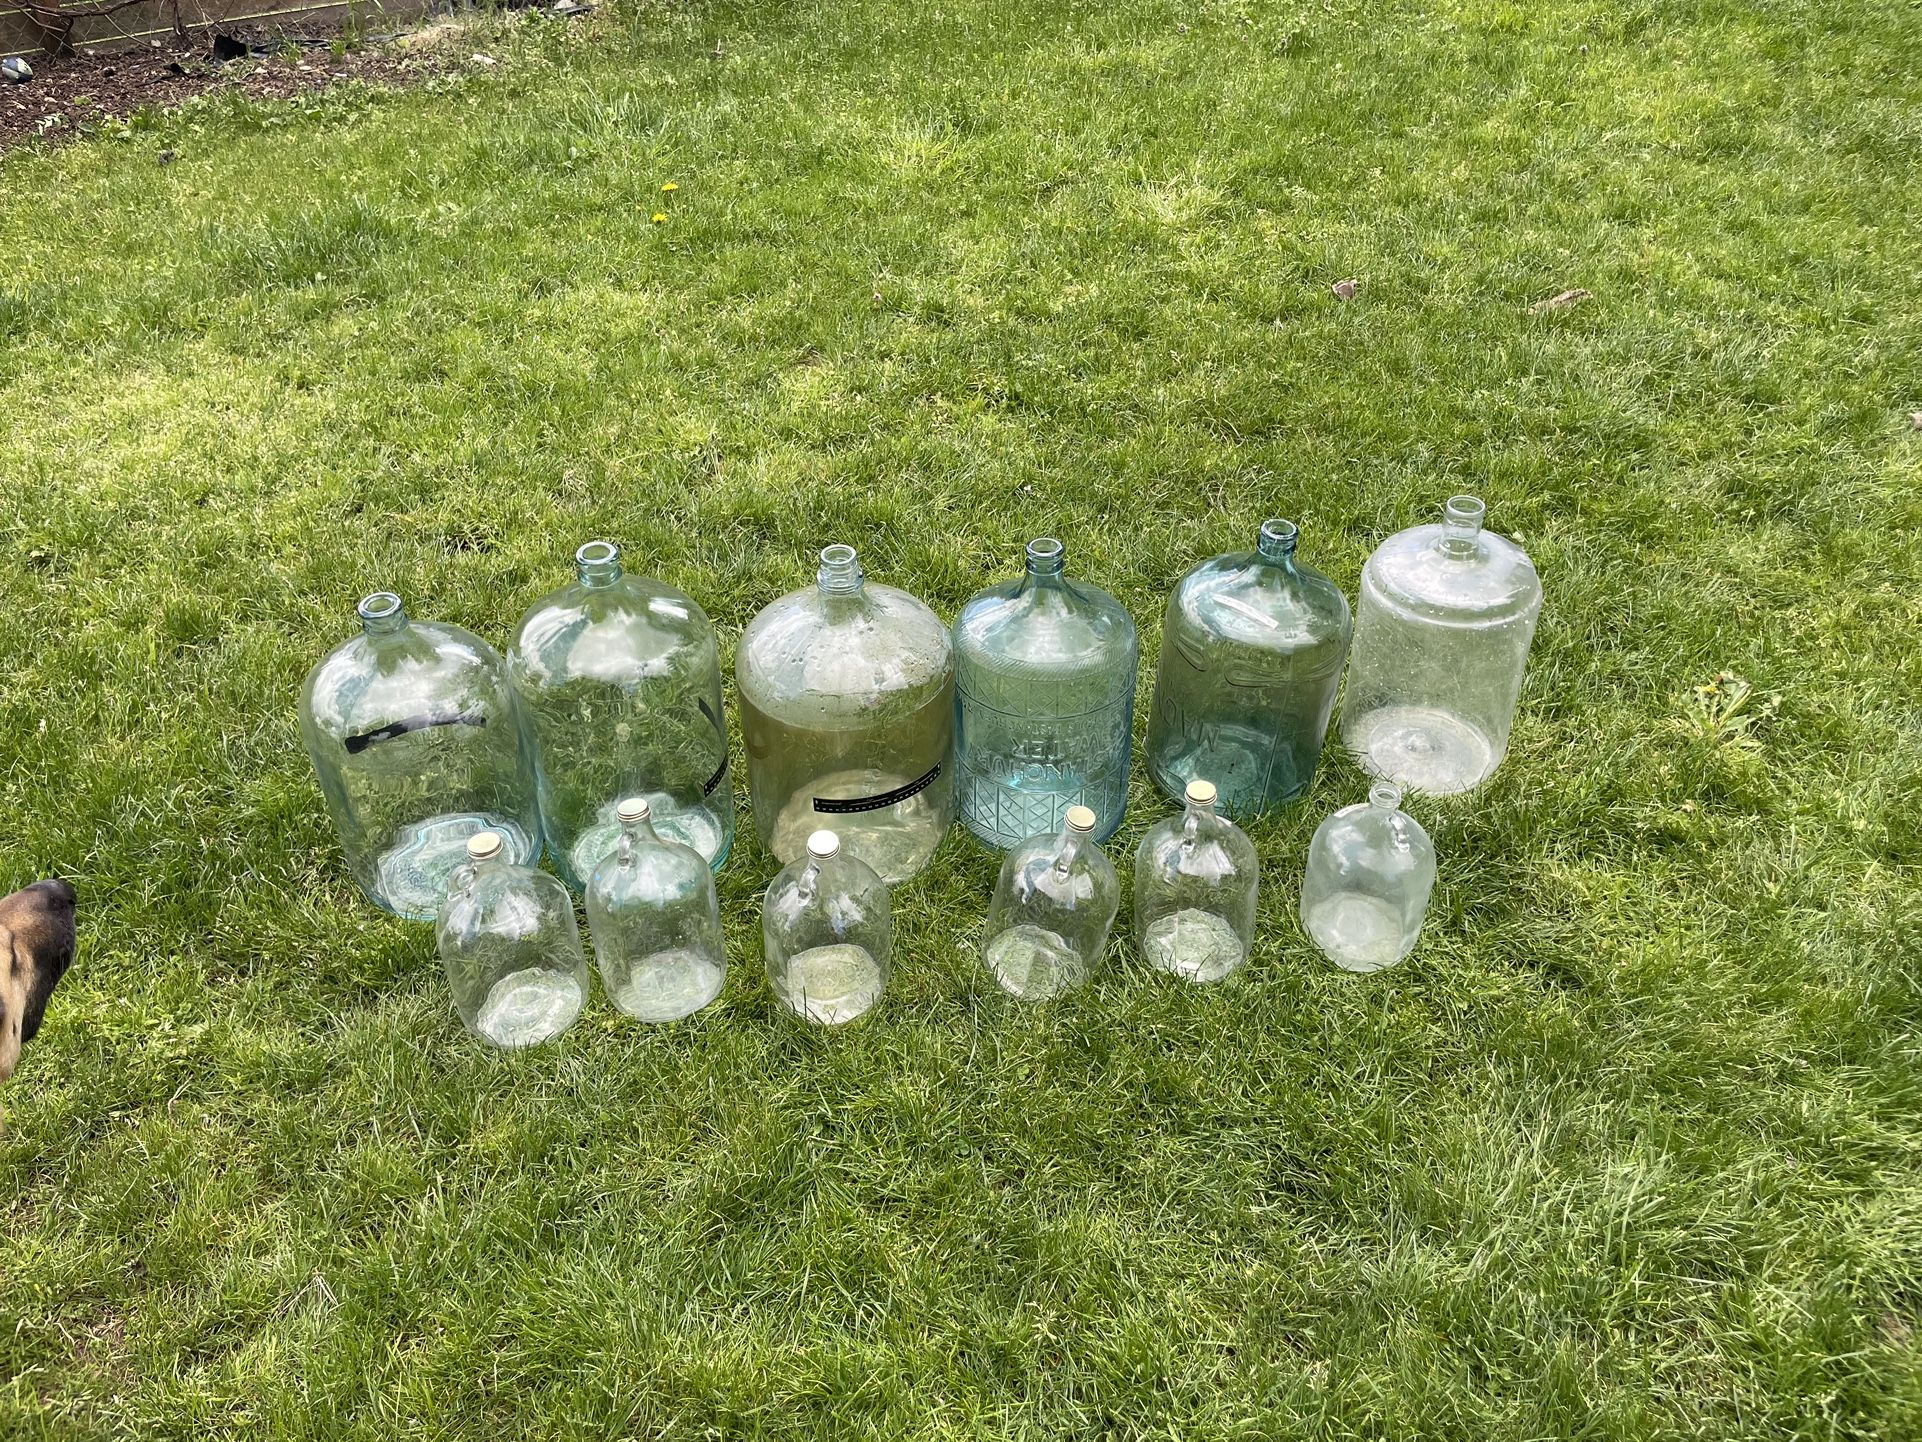 5 Carboys Glass 1 Plastic Plus 6 One Gallon Glass Jugs